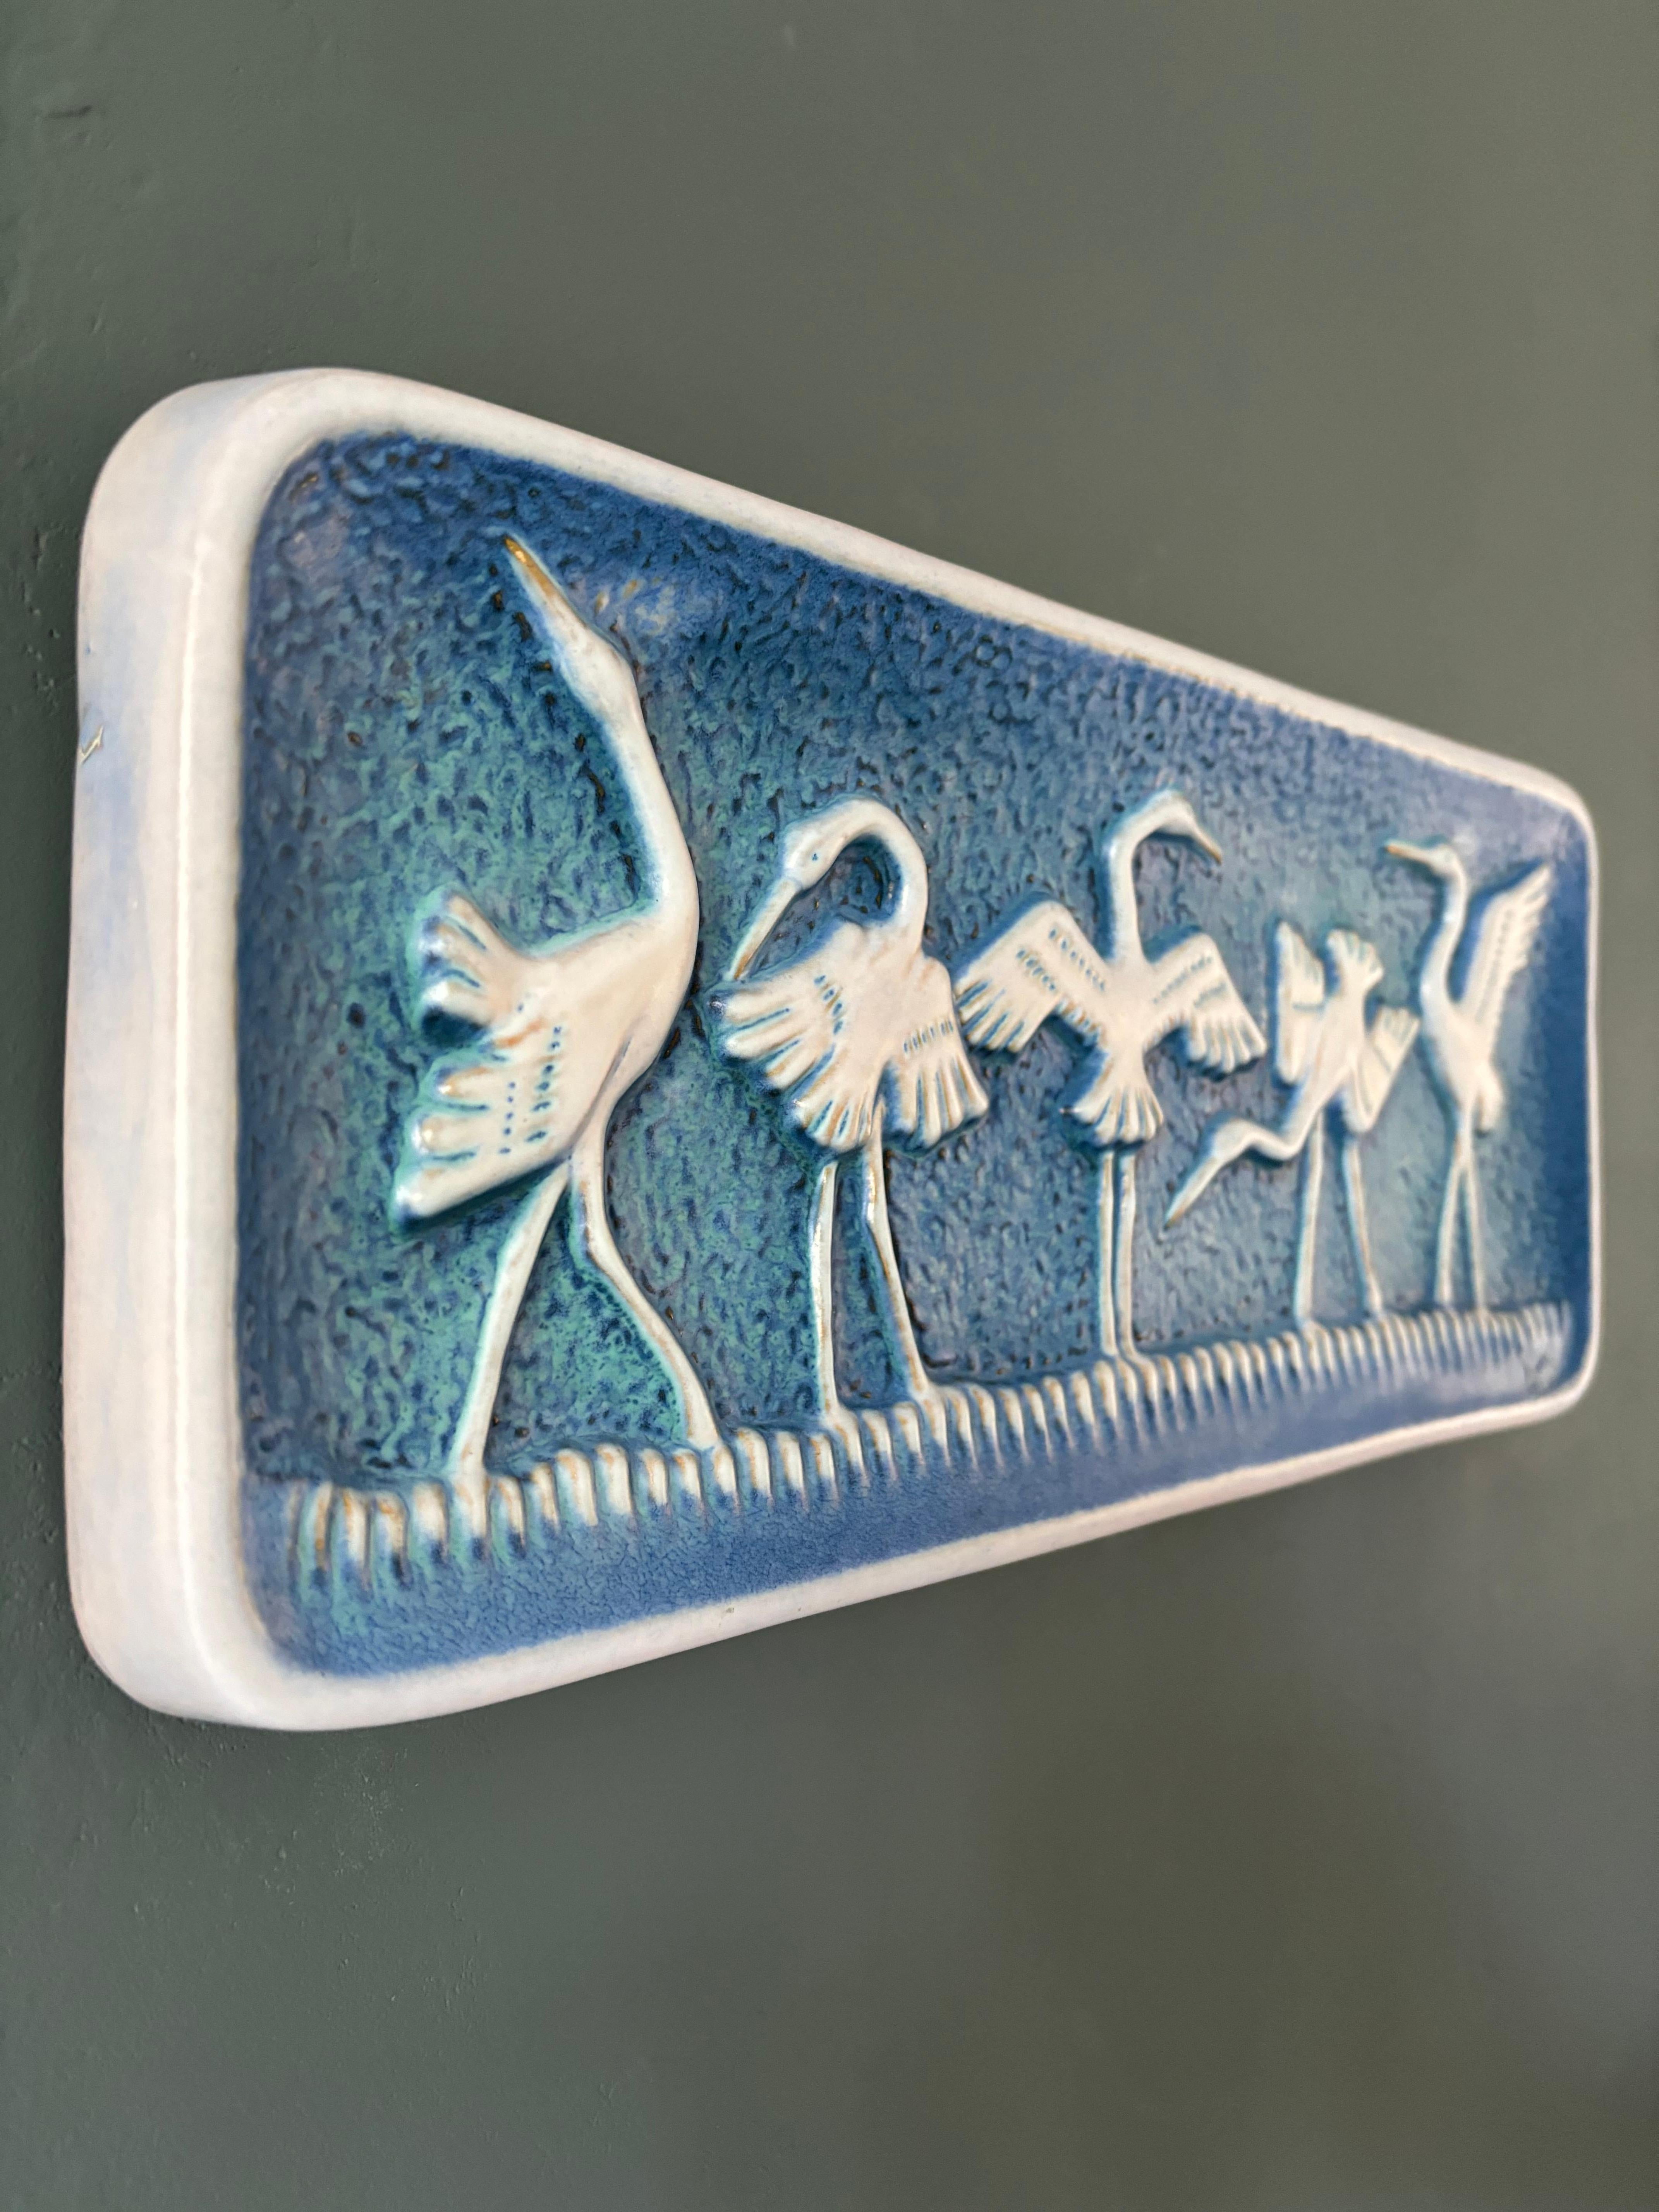 Norrman Motala Blue Crane Ceramic Wall Plaque, 1960s For Sale 2